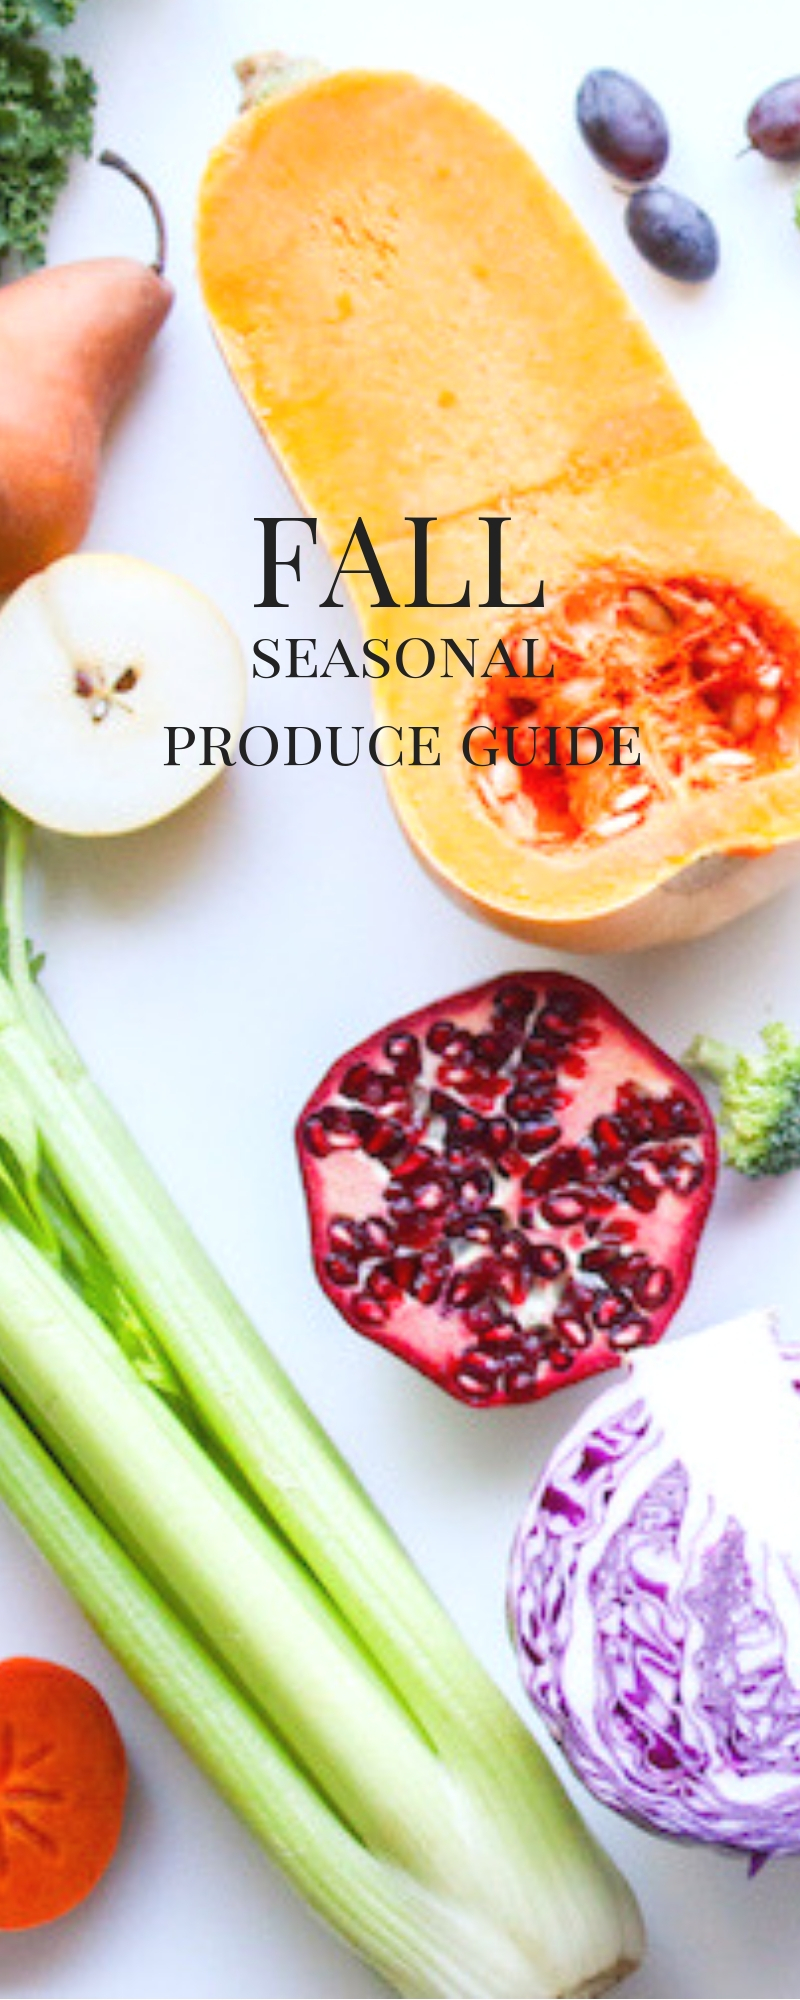 Fall Seasonal Produce Shopping Guide | www.livesimplynatural.com